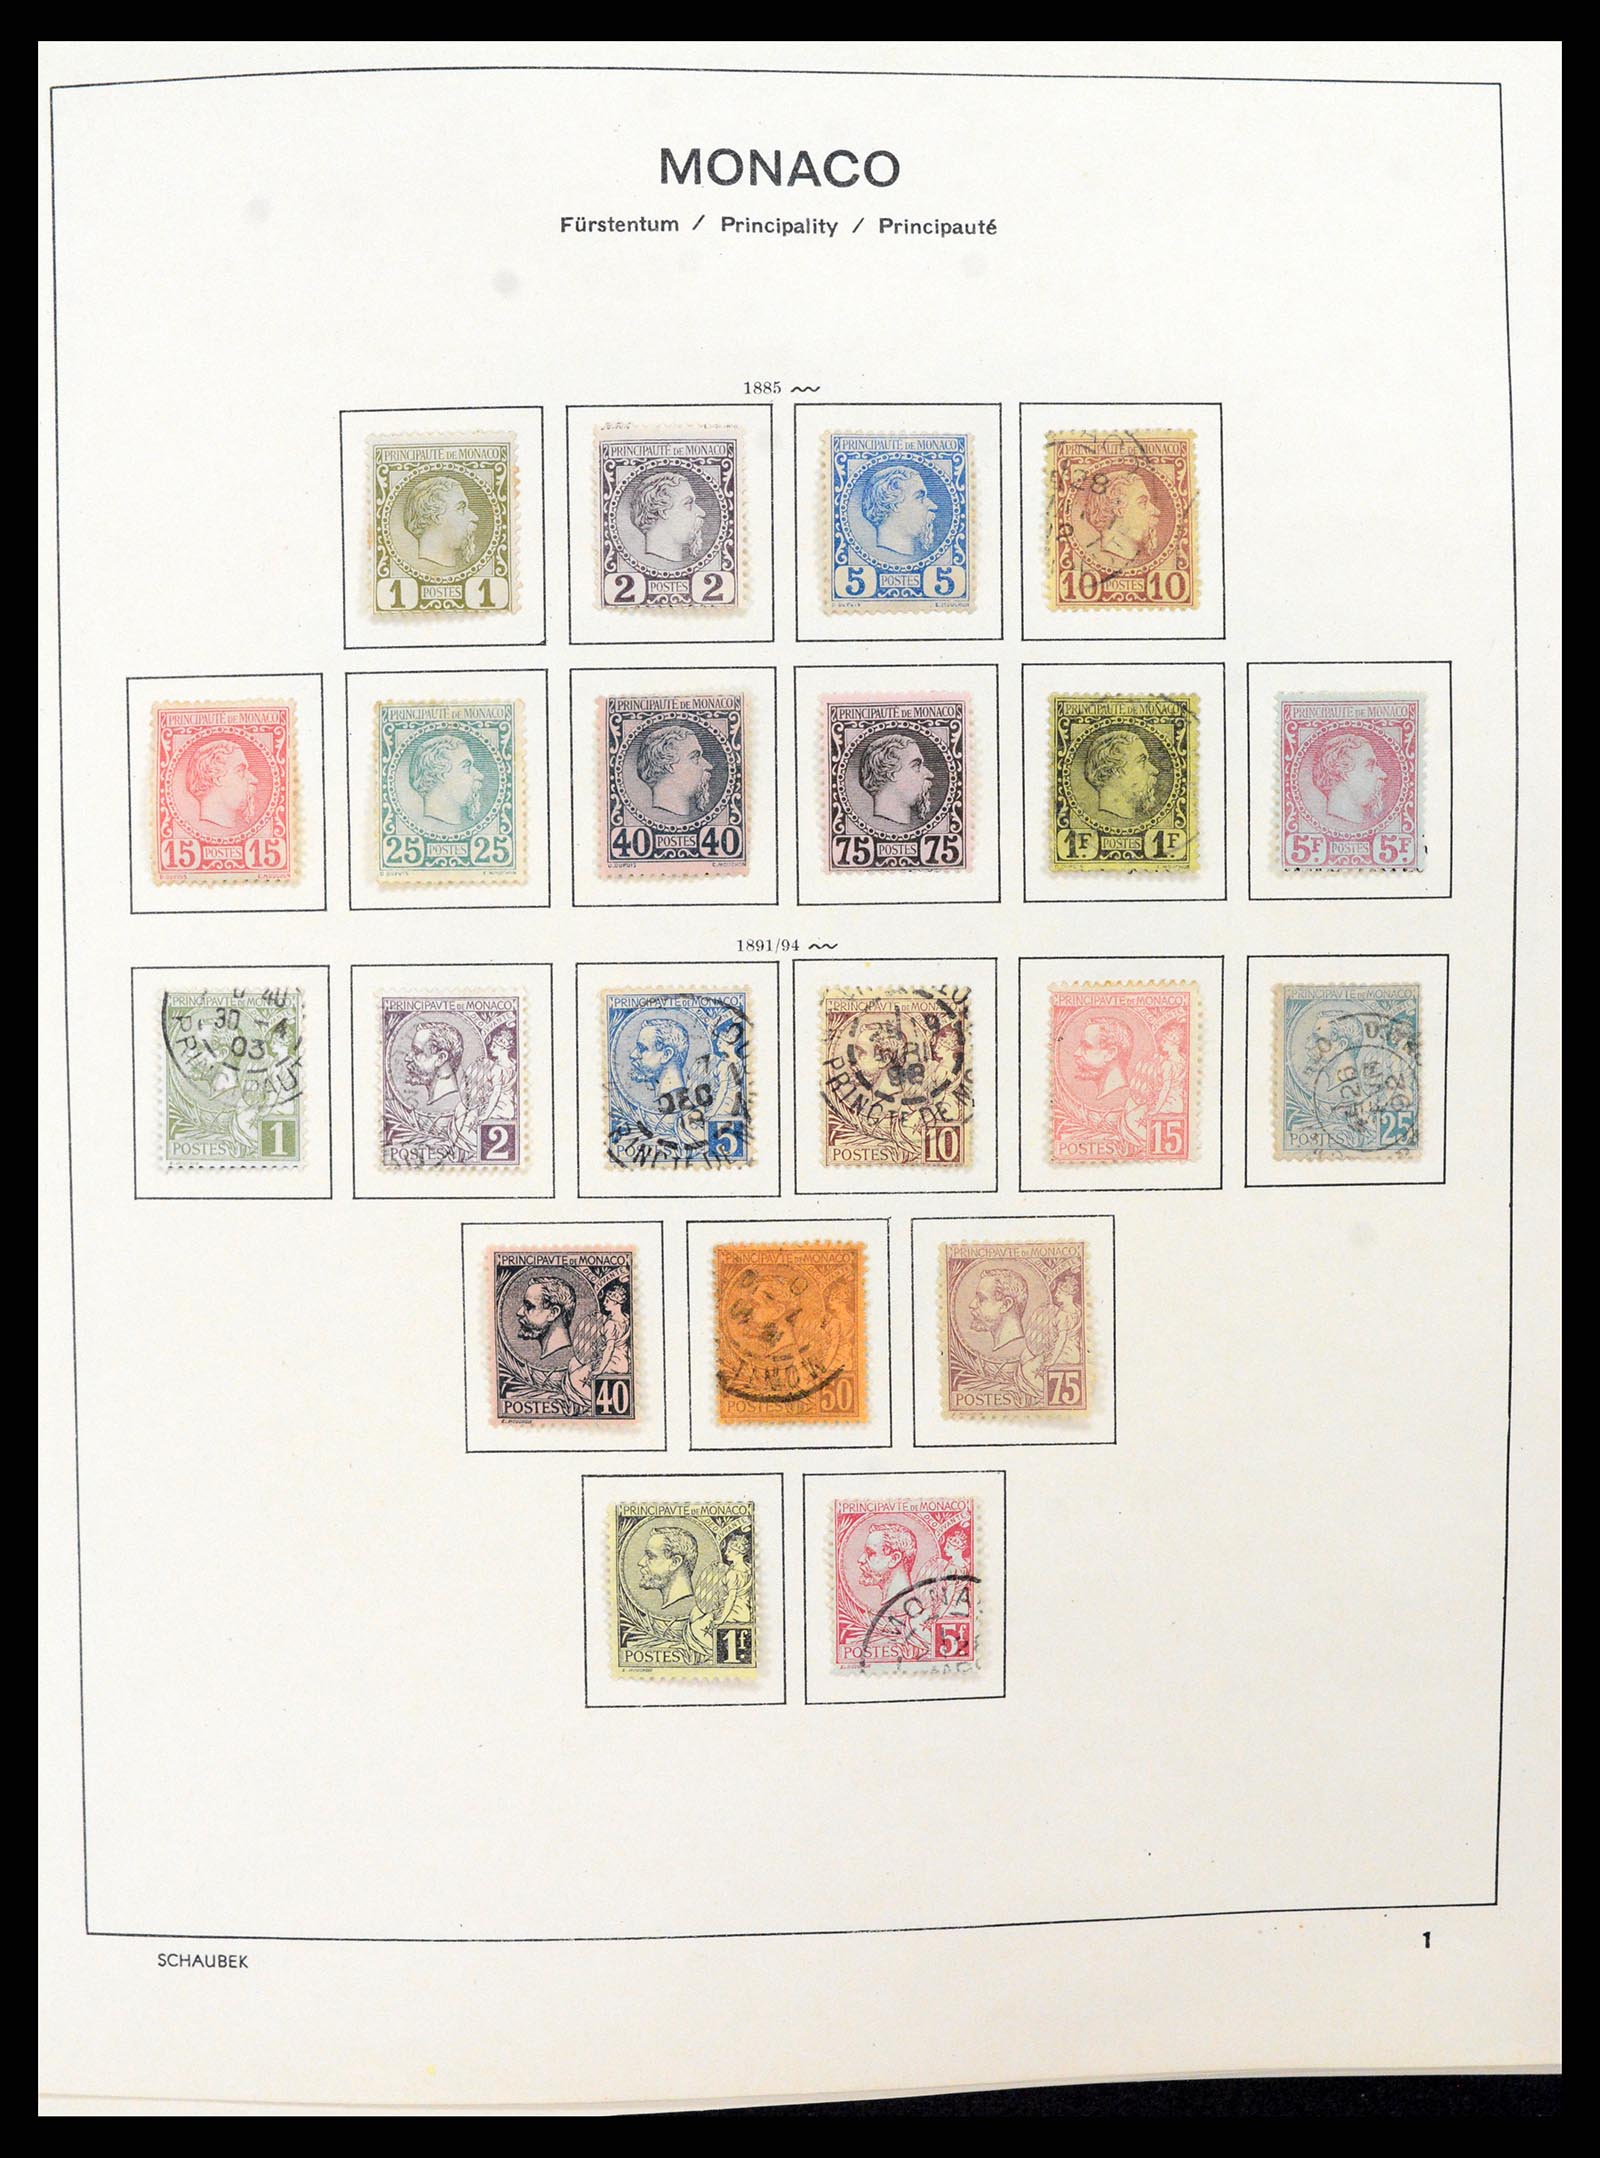 37570 001 - Stamp collection 37570 Monaco 1885-2013.